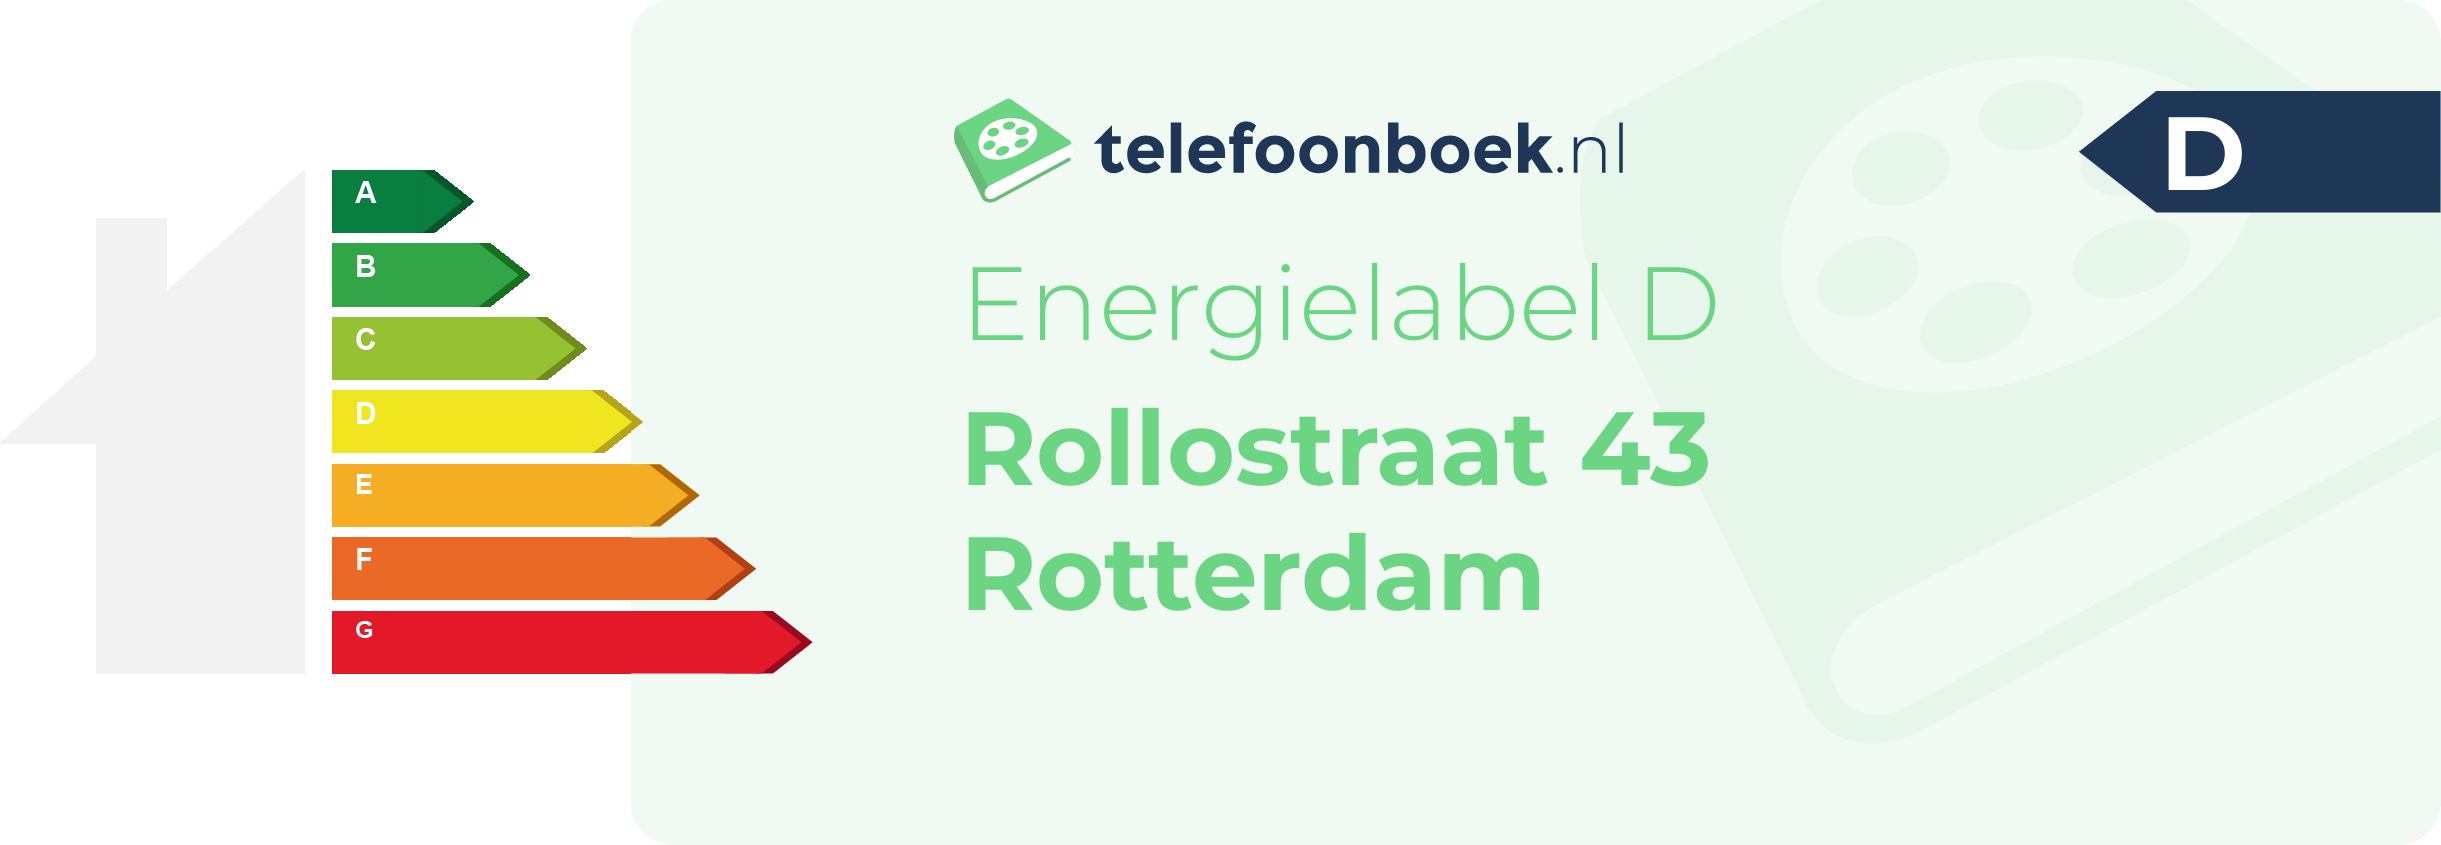 Energielabel Rollostraat 43 Rotterdam